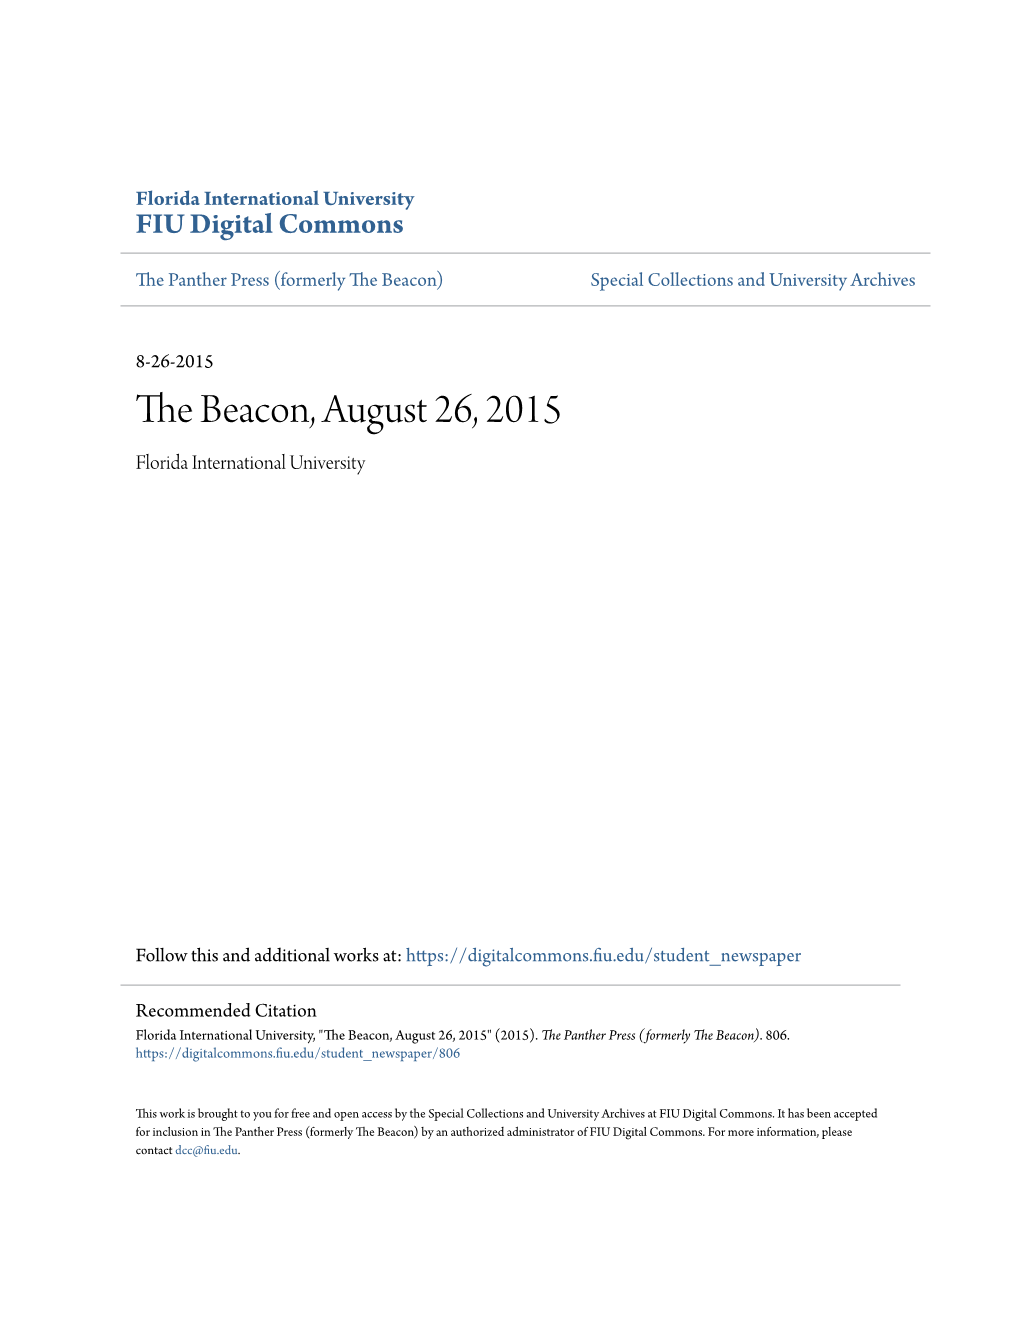 The Beacon, August 26, 2015 Florida International University